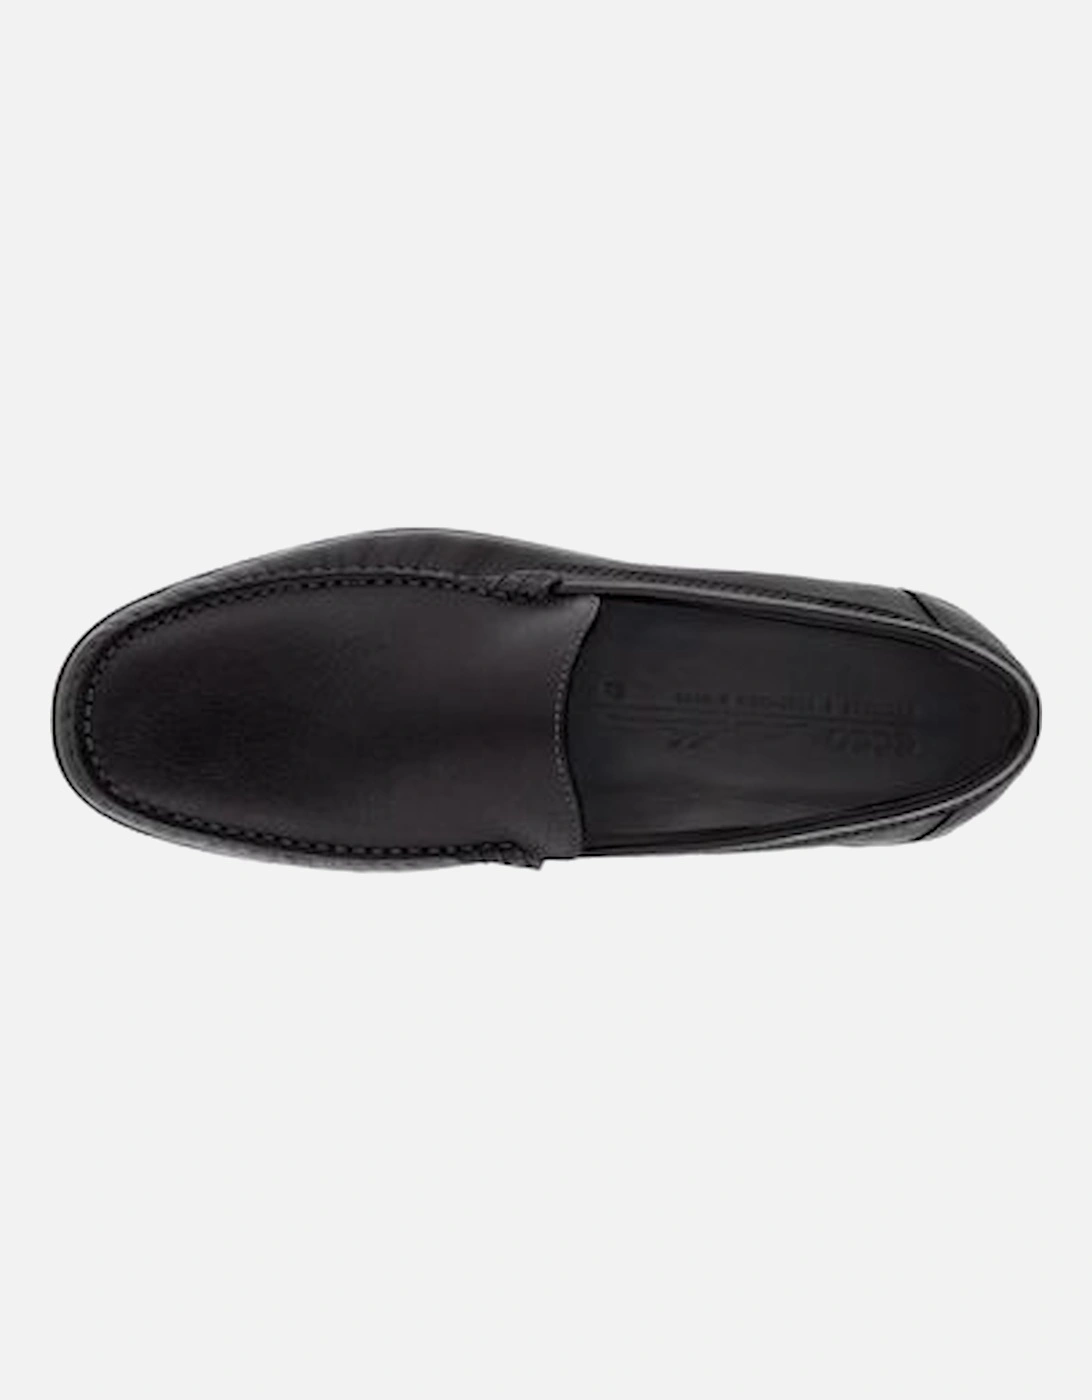 S-lite Moc Men's 540514 01001 black leather Slip on shoe